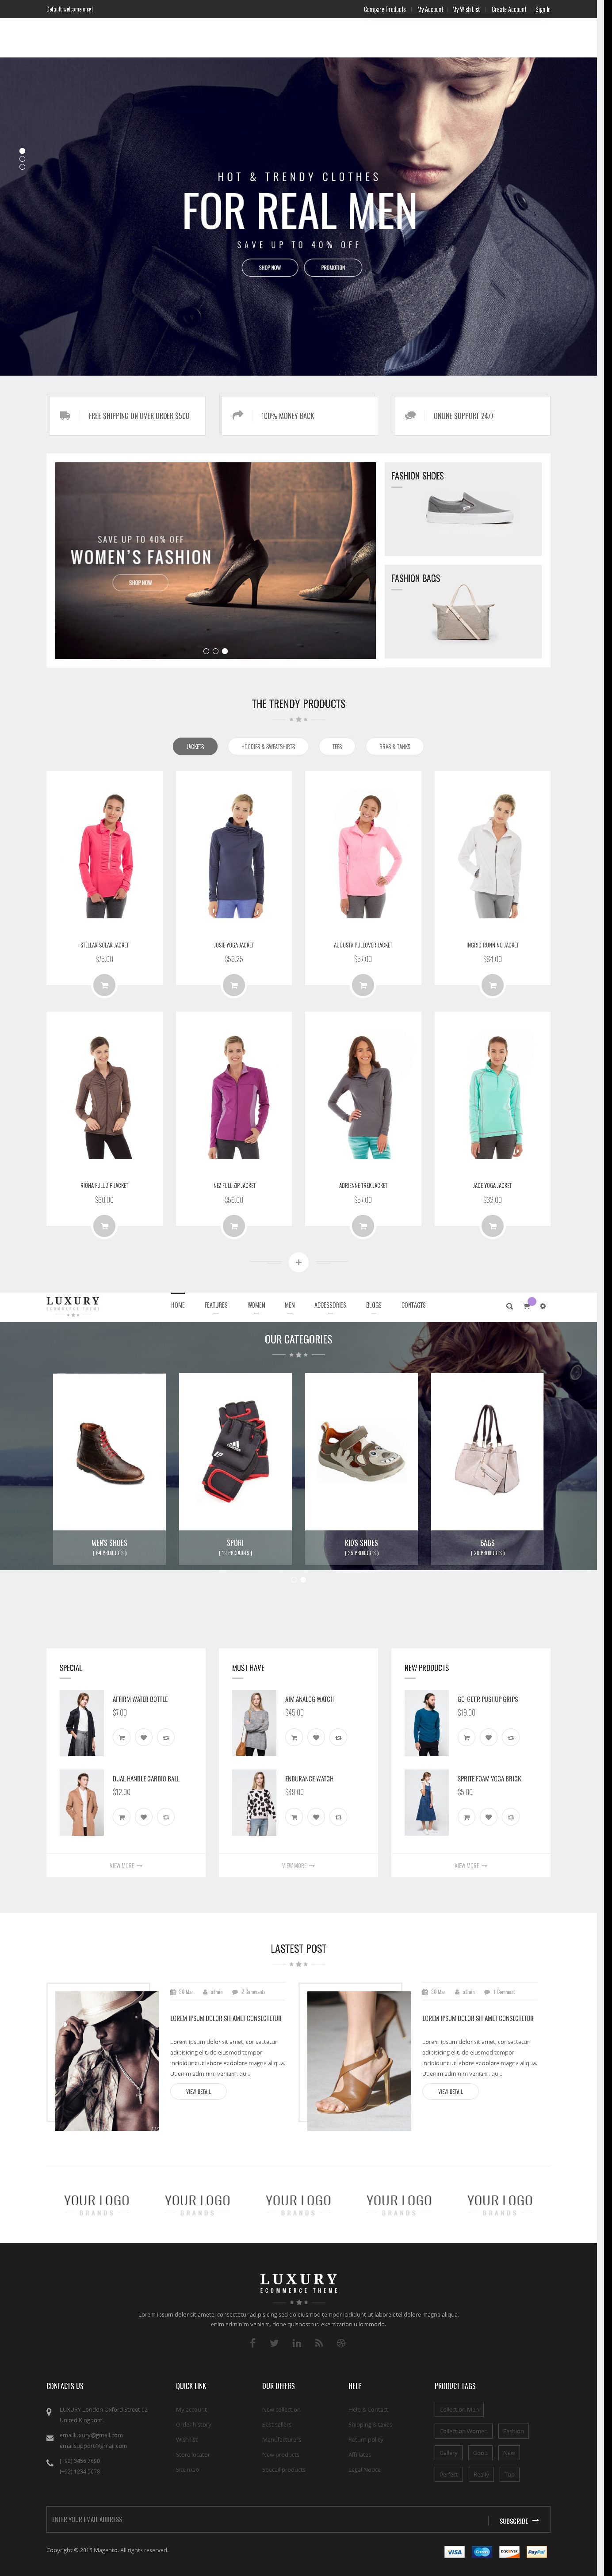 Top 5 Magento Themes for Clothing Store - Luxury - Premium Fashion Magento Theme